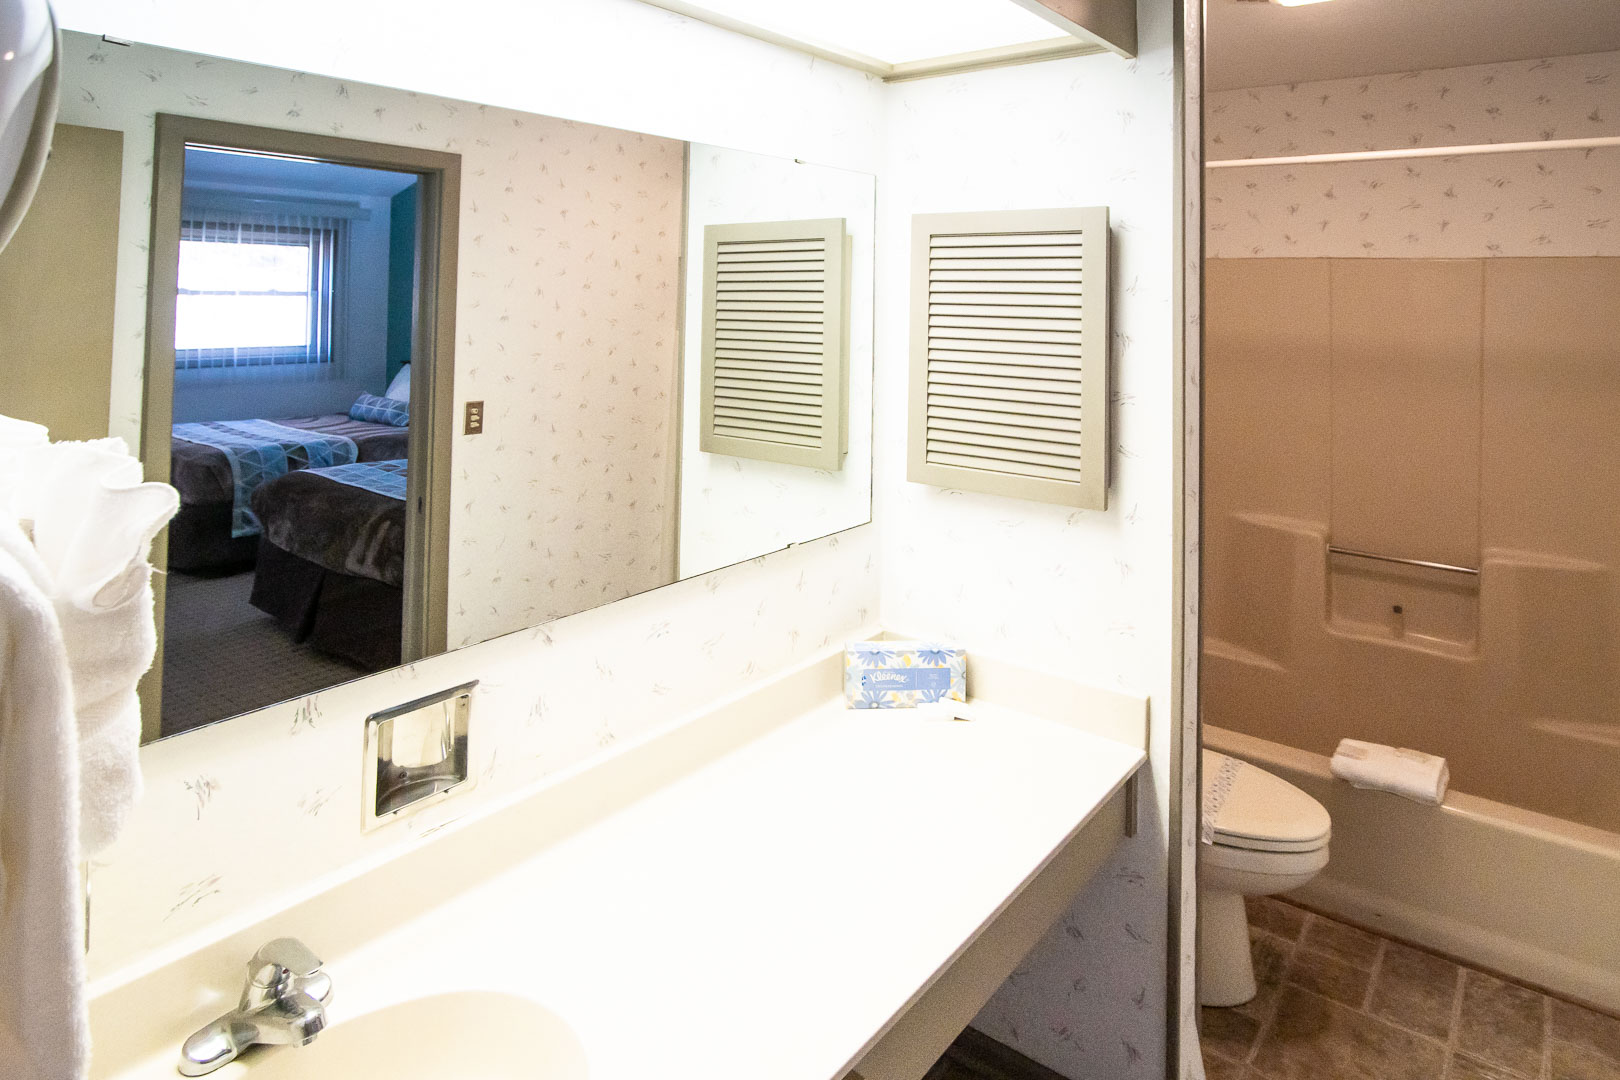 A clean and spacious bathroom at VRI's Fox Run Resort in North Carolina.